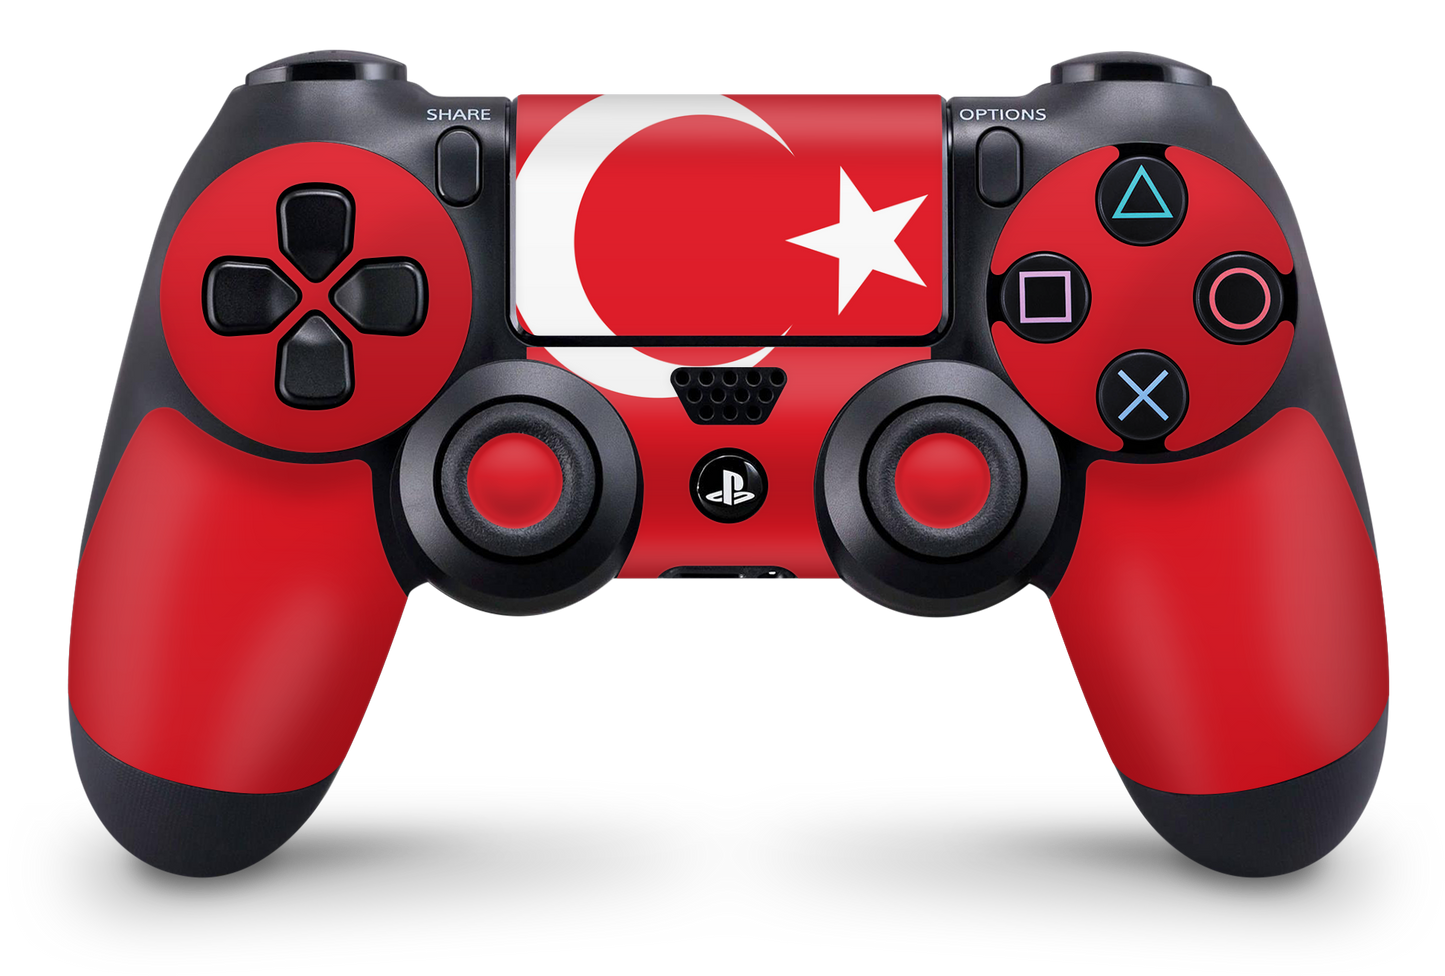 PS4 Playstation 4 Controller Skins - Vinyl Skin Aufkleber für Gaming Controller Tuerkei Flagge rot Aufkleber Skins4u   